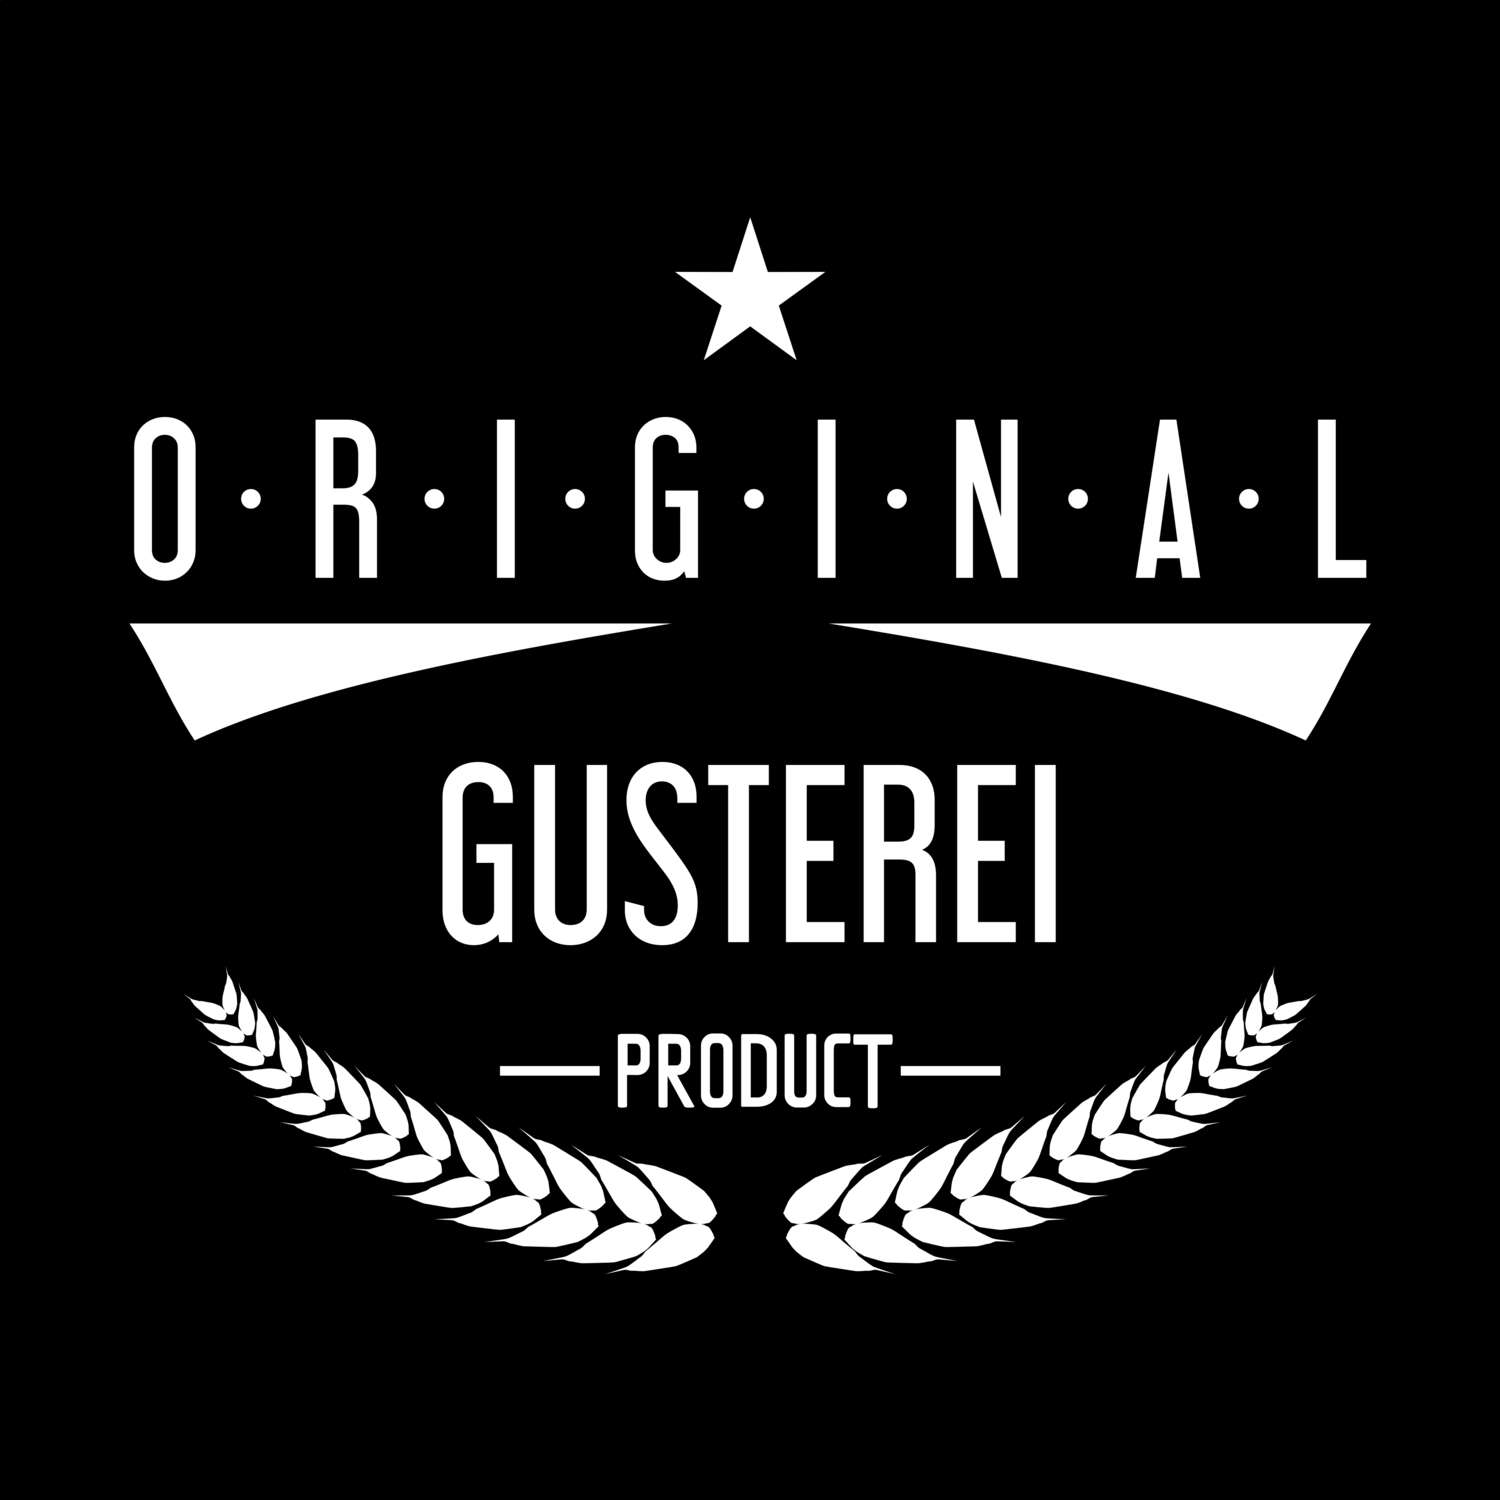 Gusterei T-Shirt »Original Product«